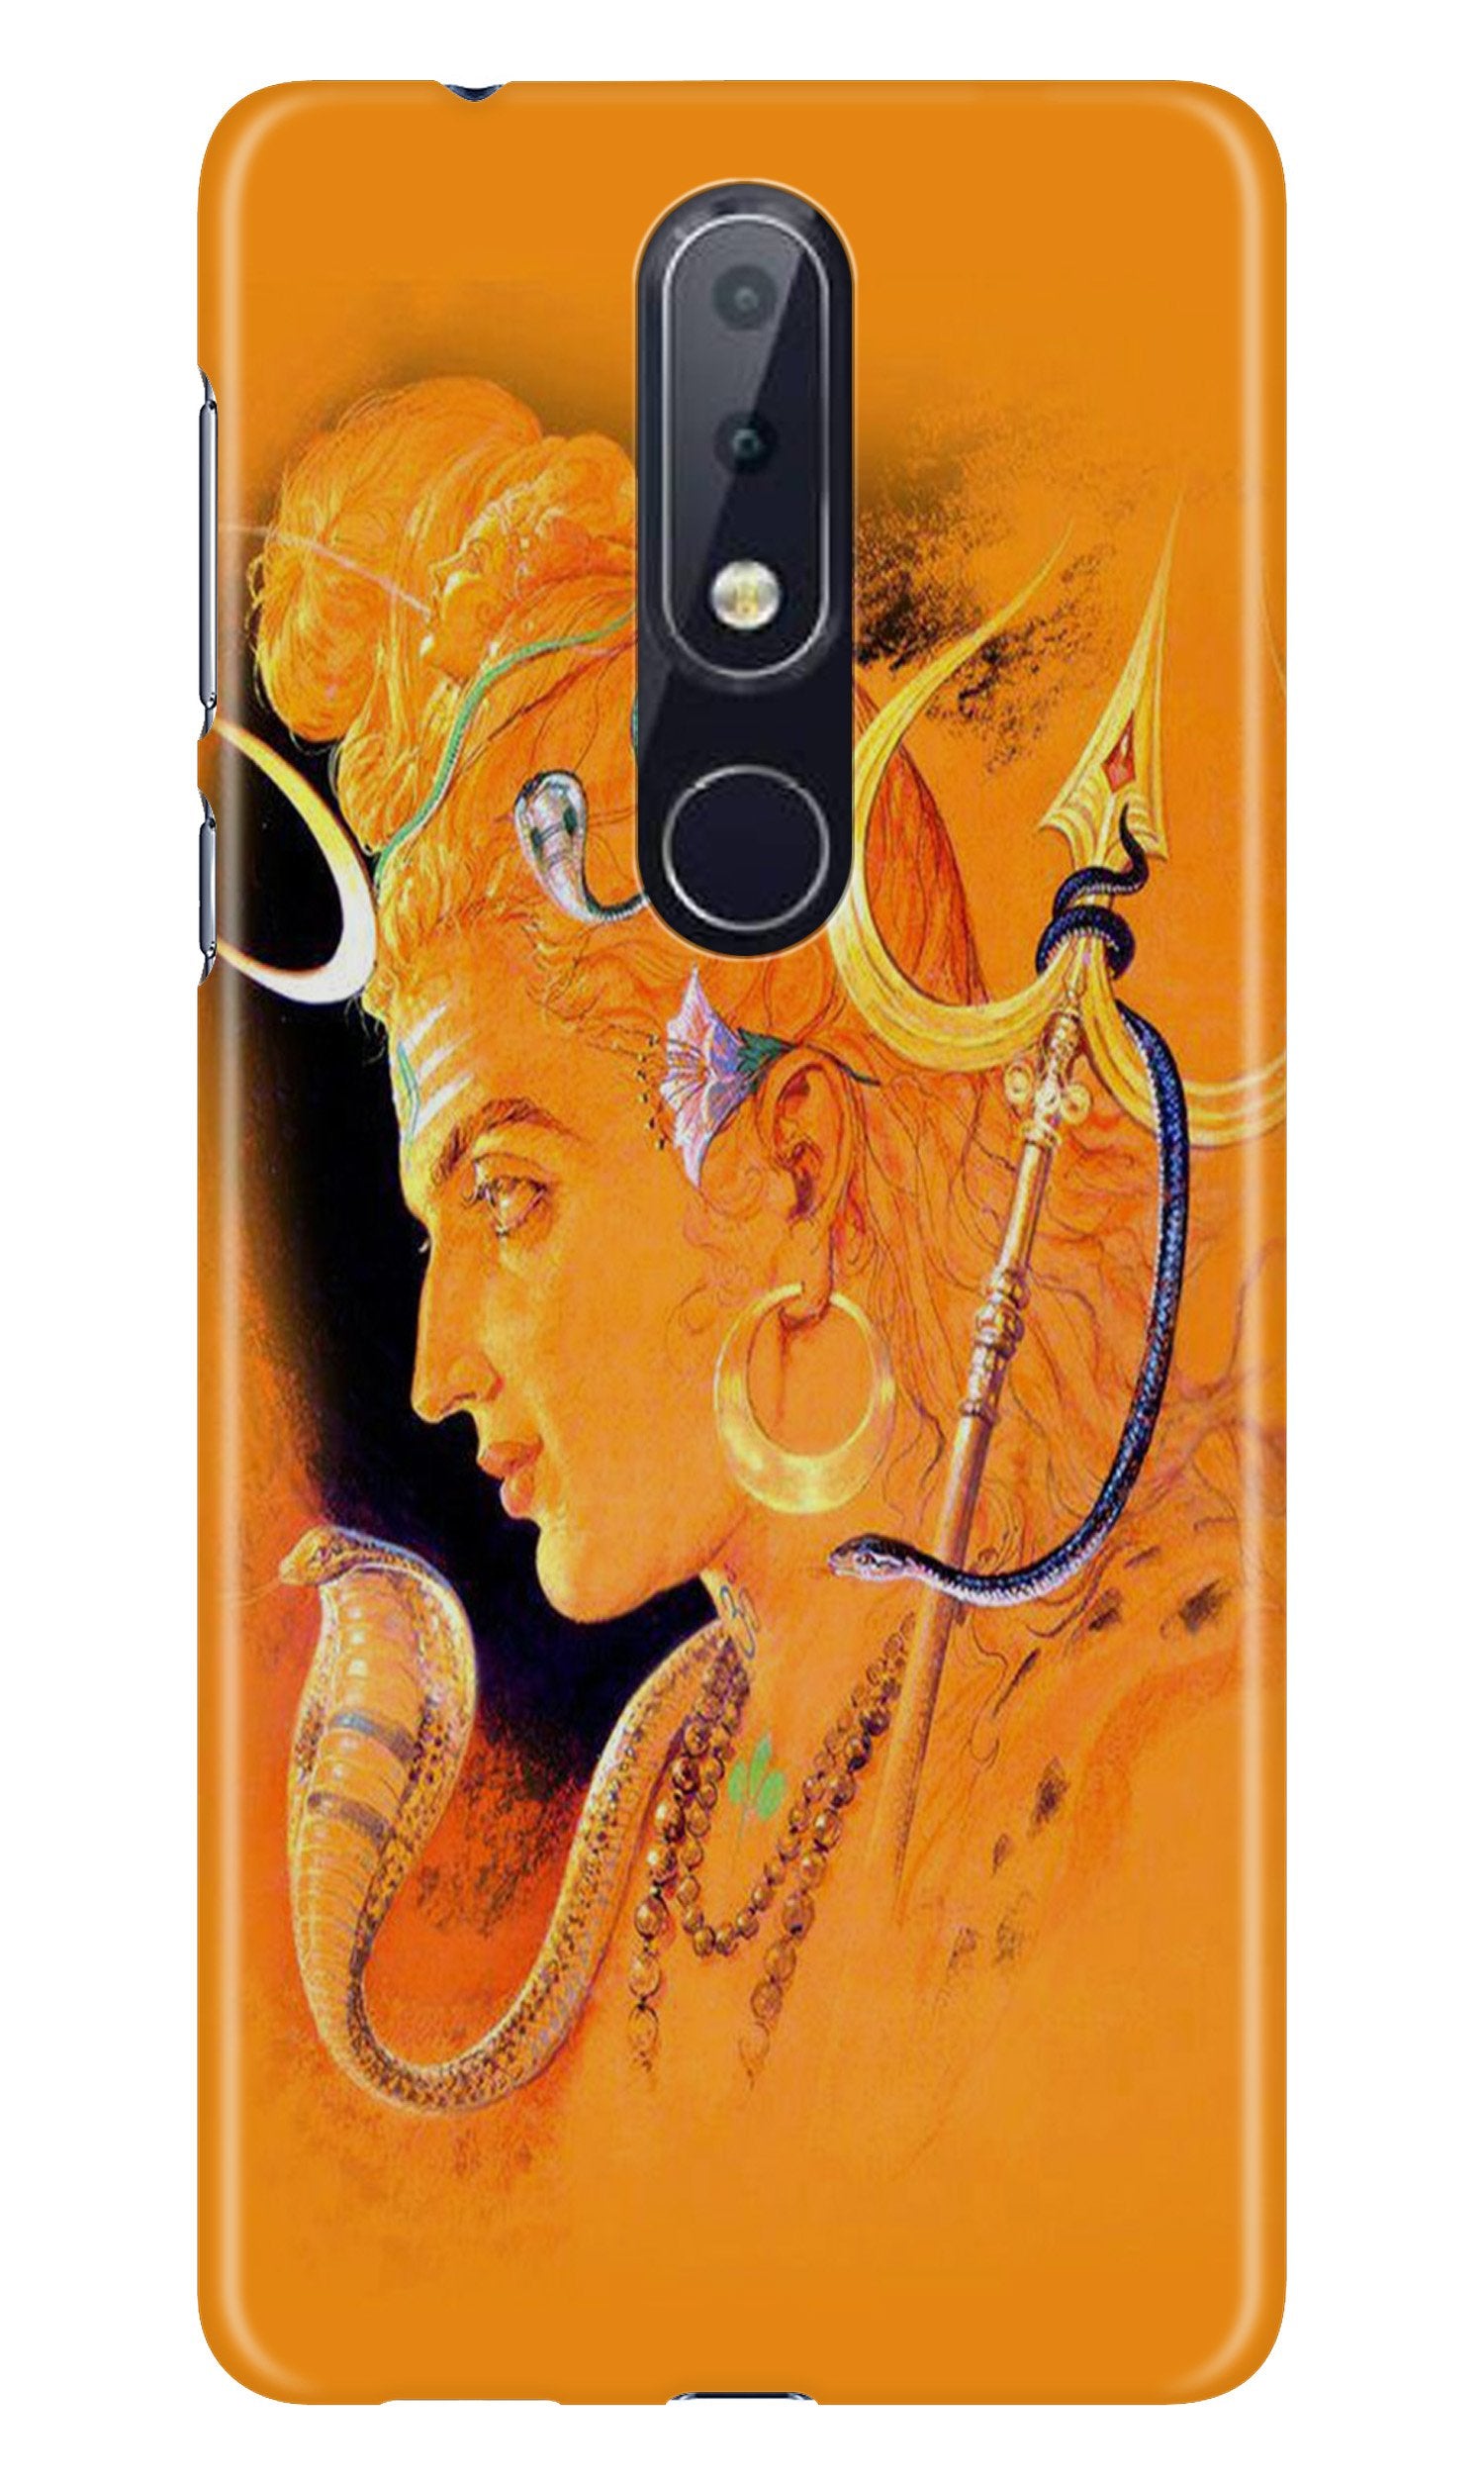 Lord Shiva Case for Nokia 4.2 (Design No. 293)